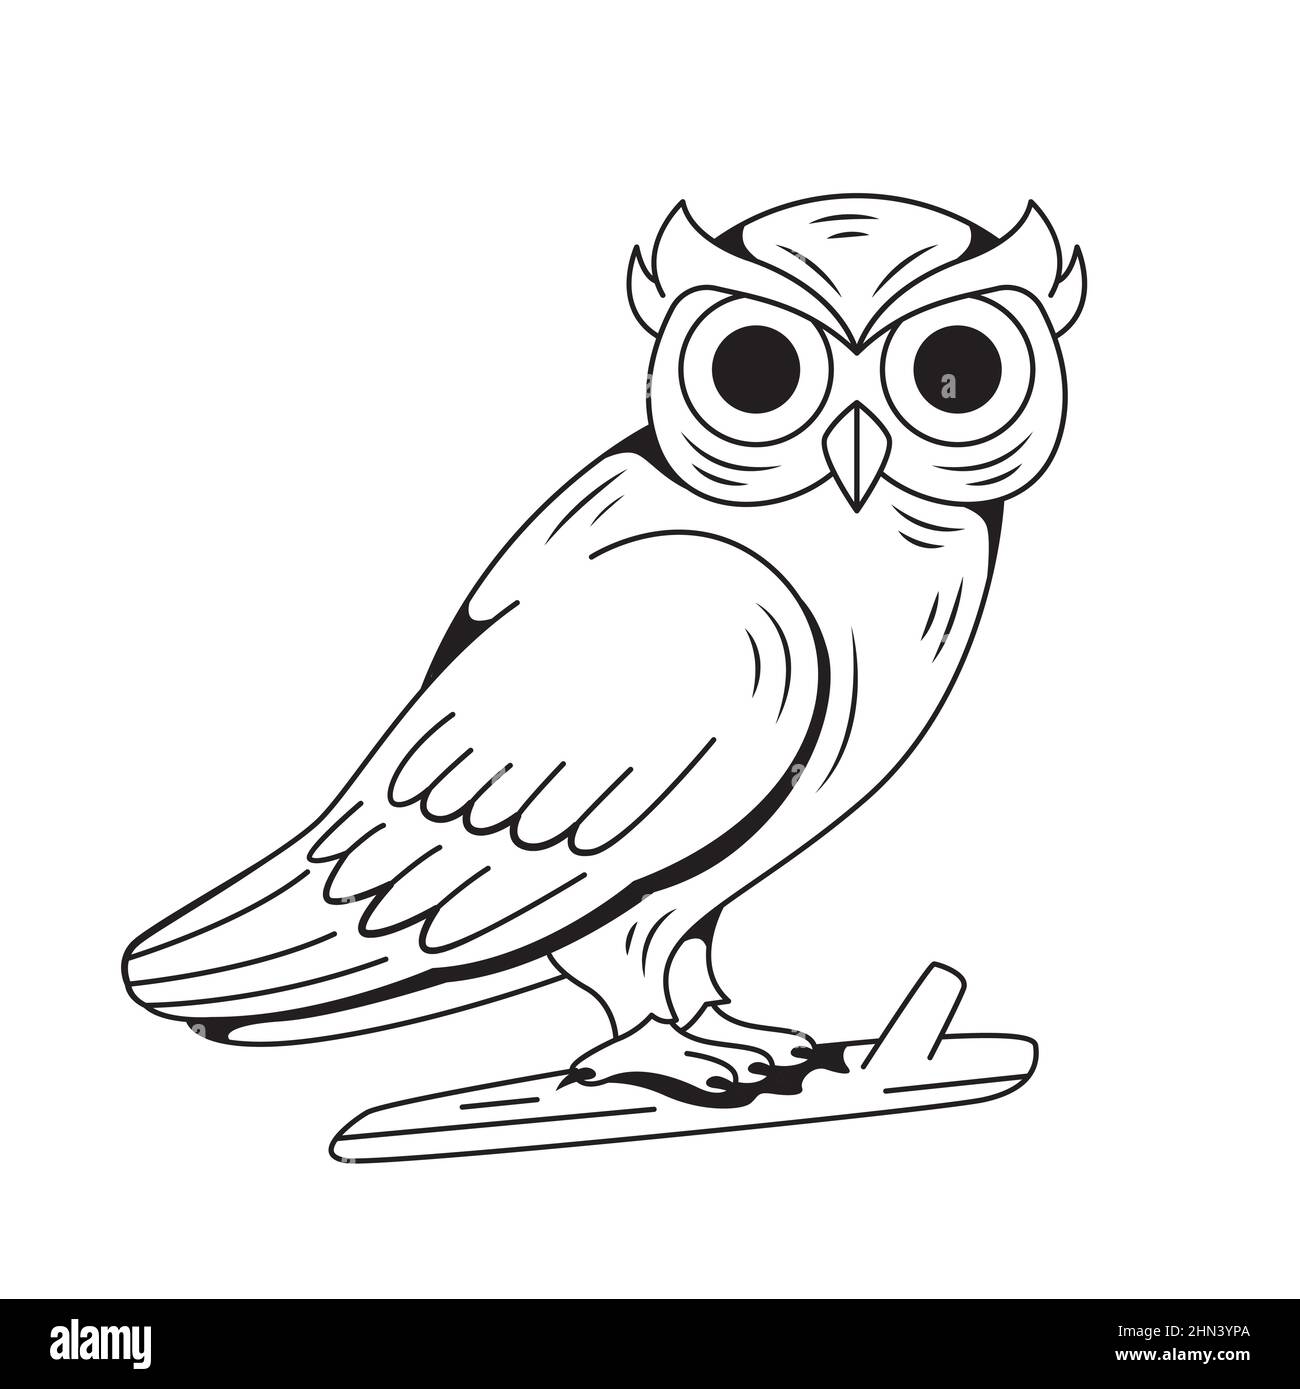 Hand drawn owl outline illustration Vector illustration. Stock Vector